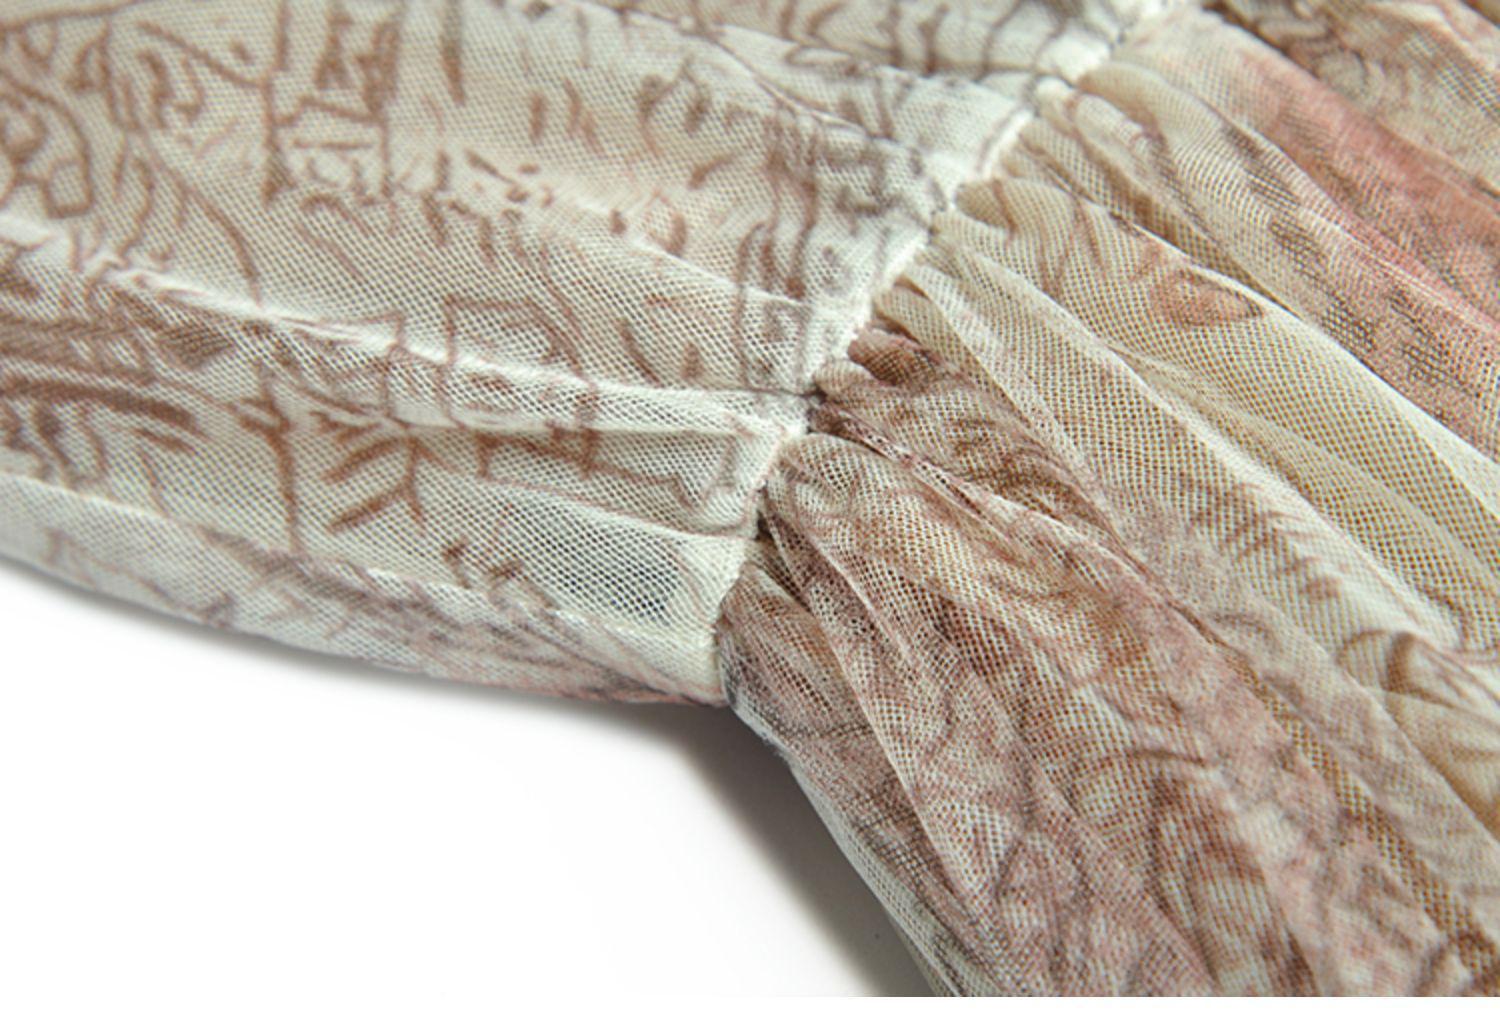 Elegant long sleeve lace up Midi Dress - EA257